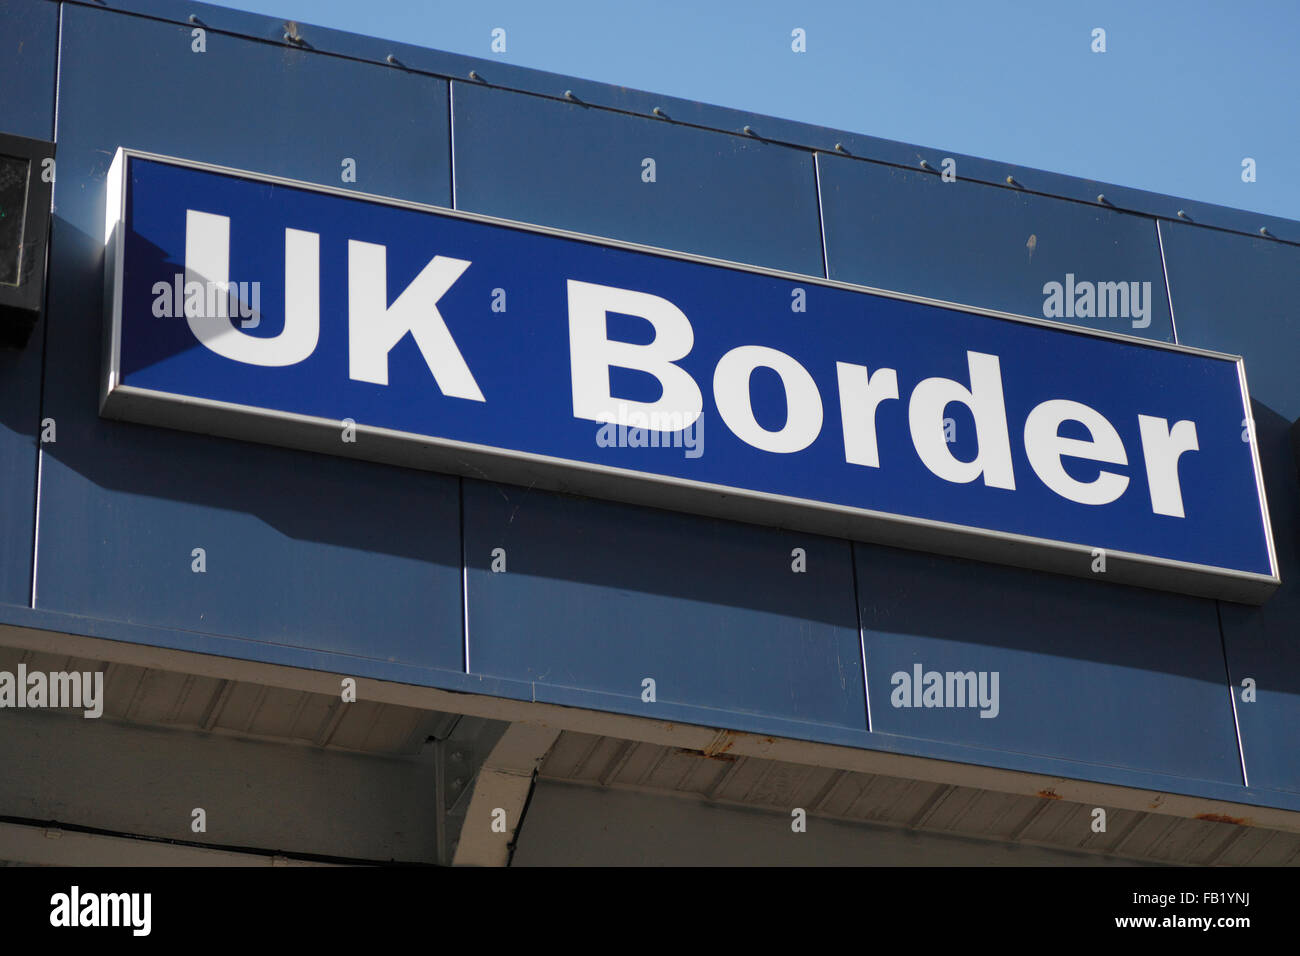 UK Border passport control sign Stock Photo